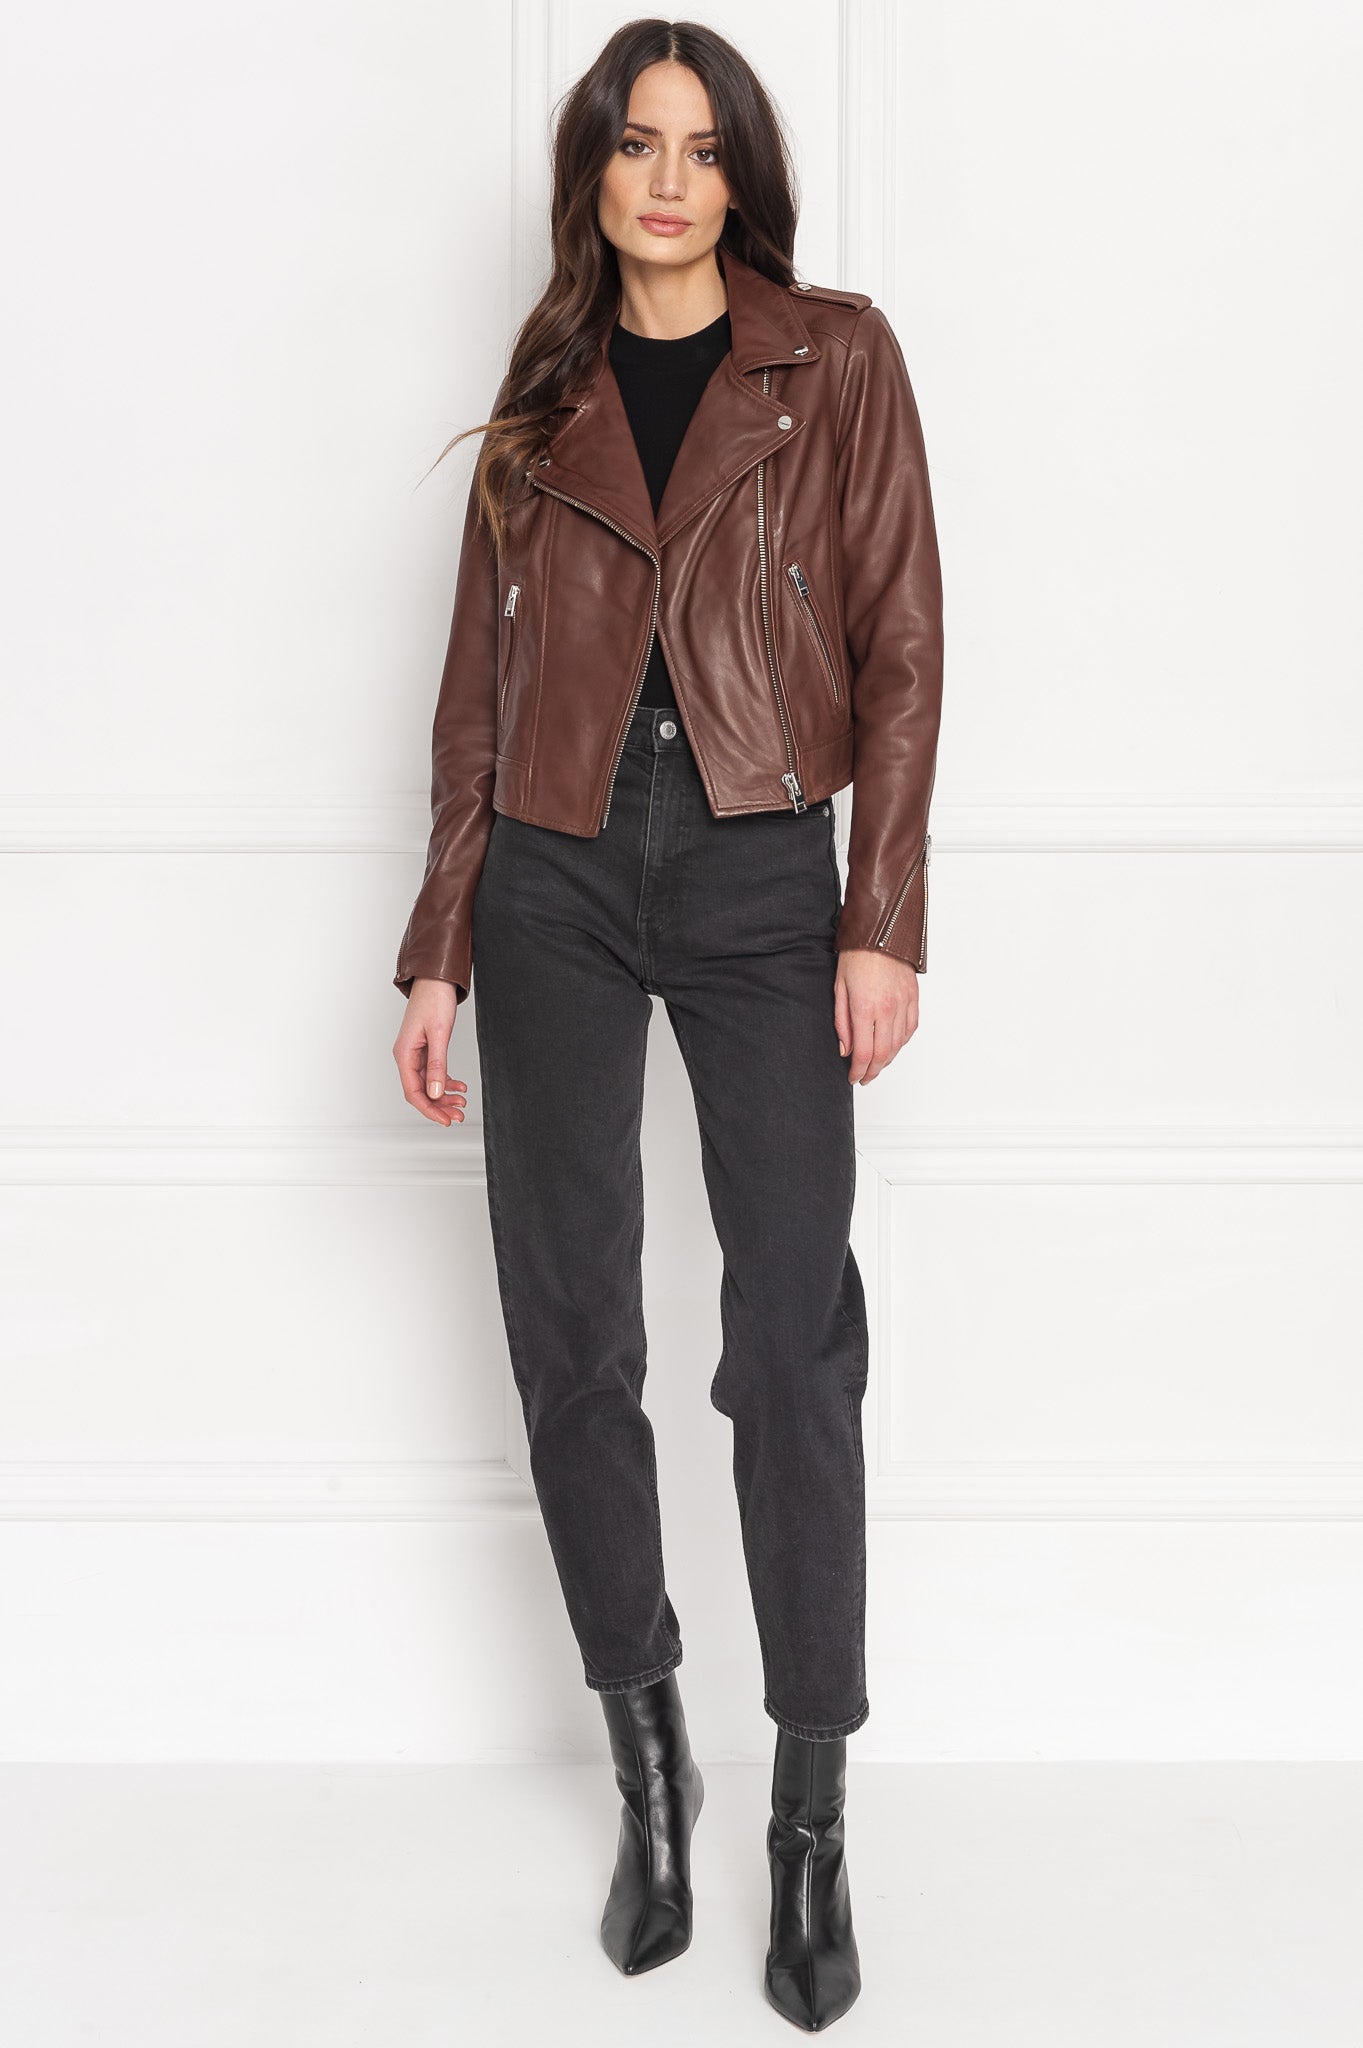 Lamarque Donna Gold Iconic Leather Biker Jacket